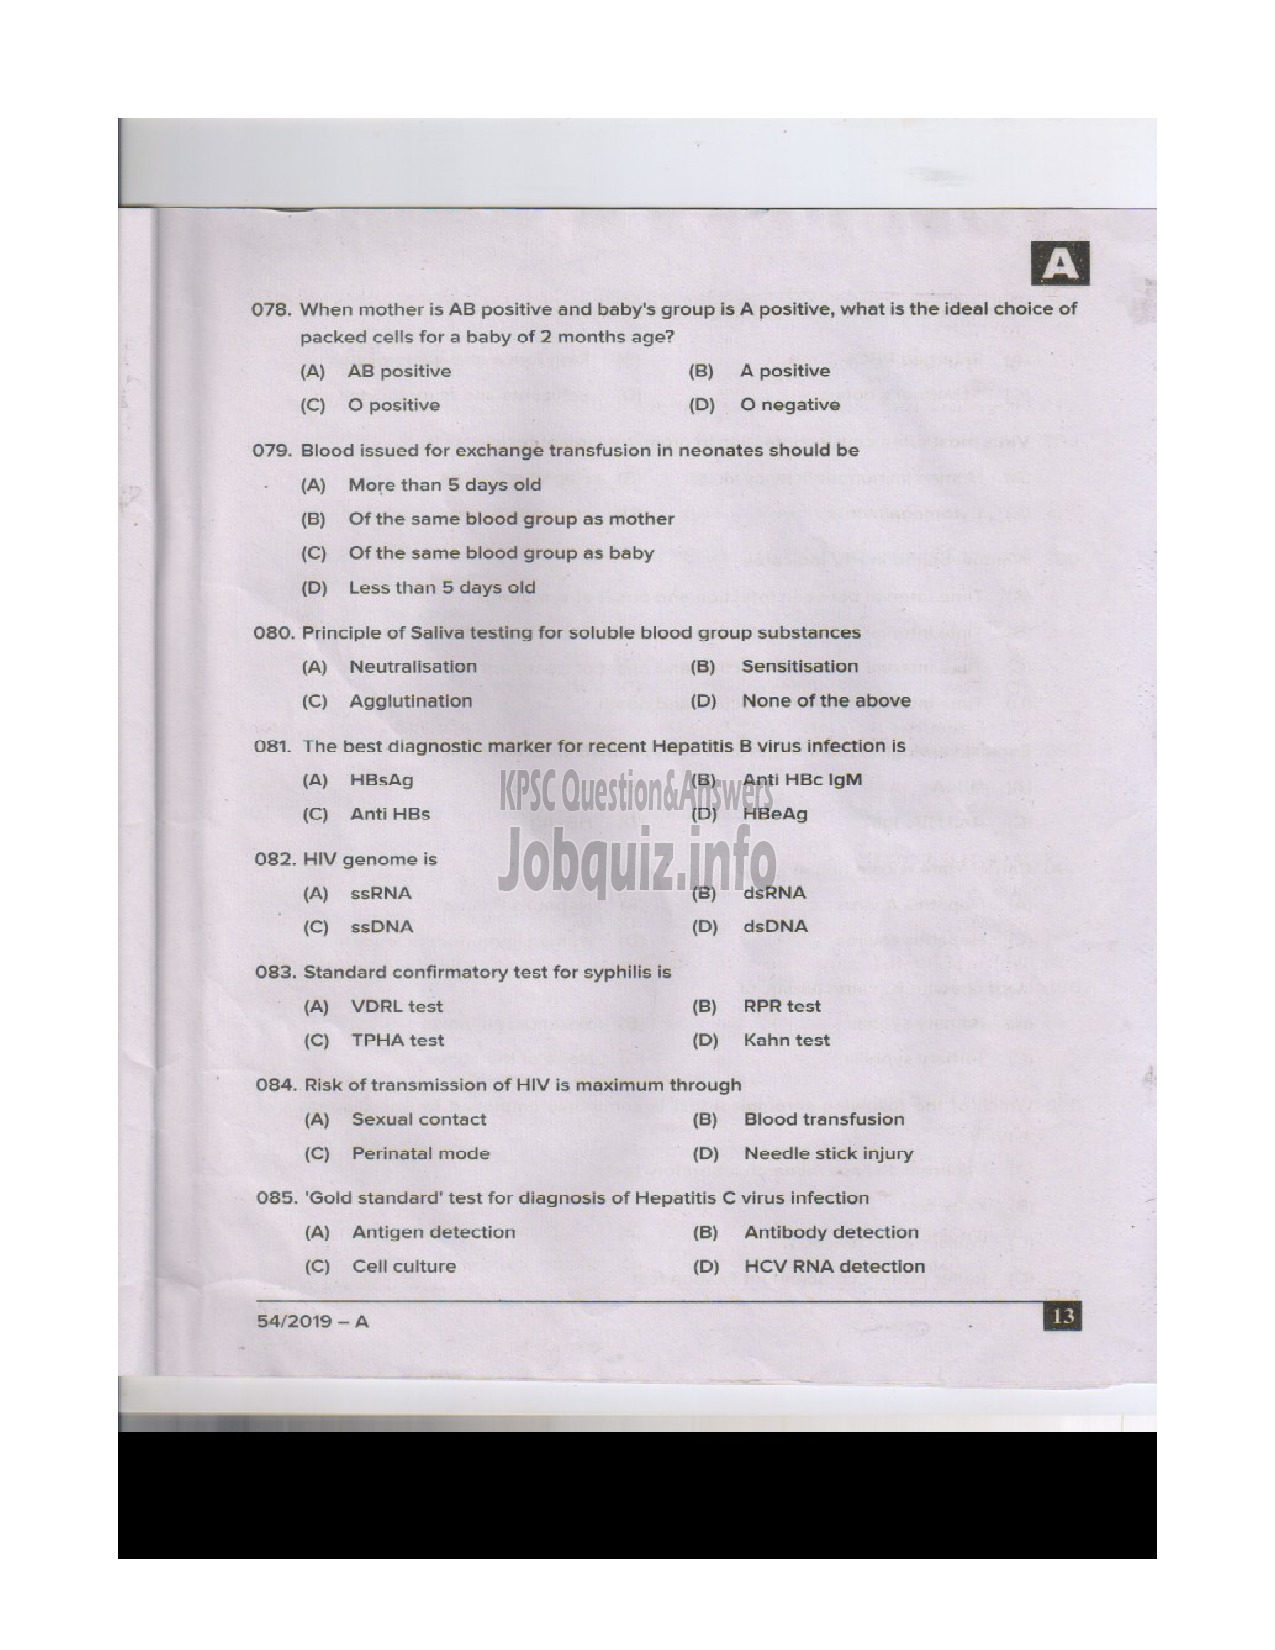 Kerala PSC Question Paper - BLOOD BANK TECHNICIAN HEALTH SERVICES ENGLISH -13